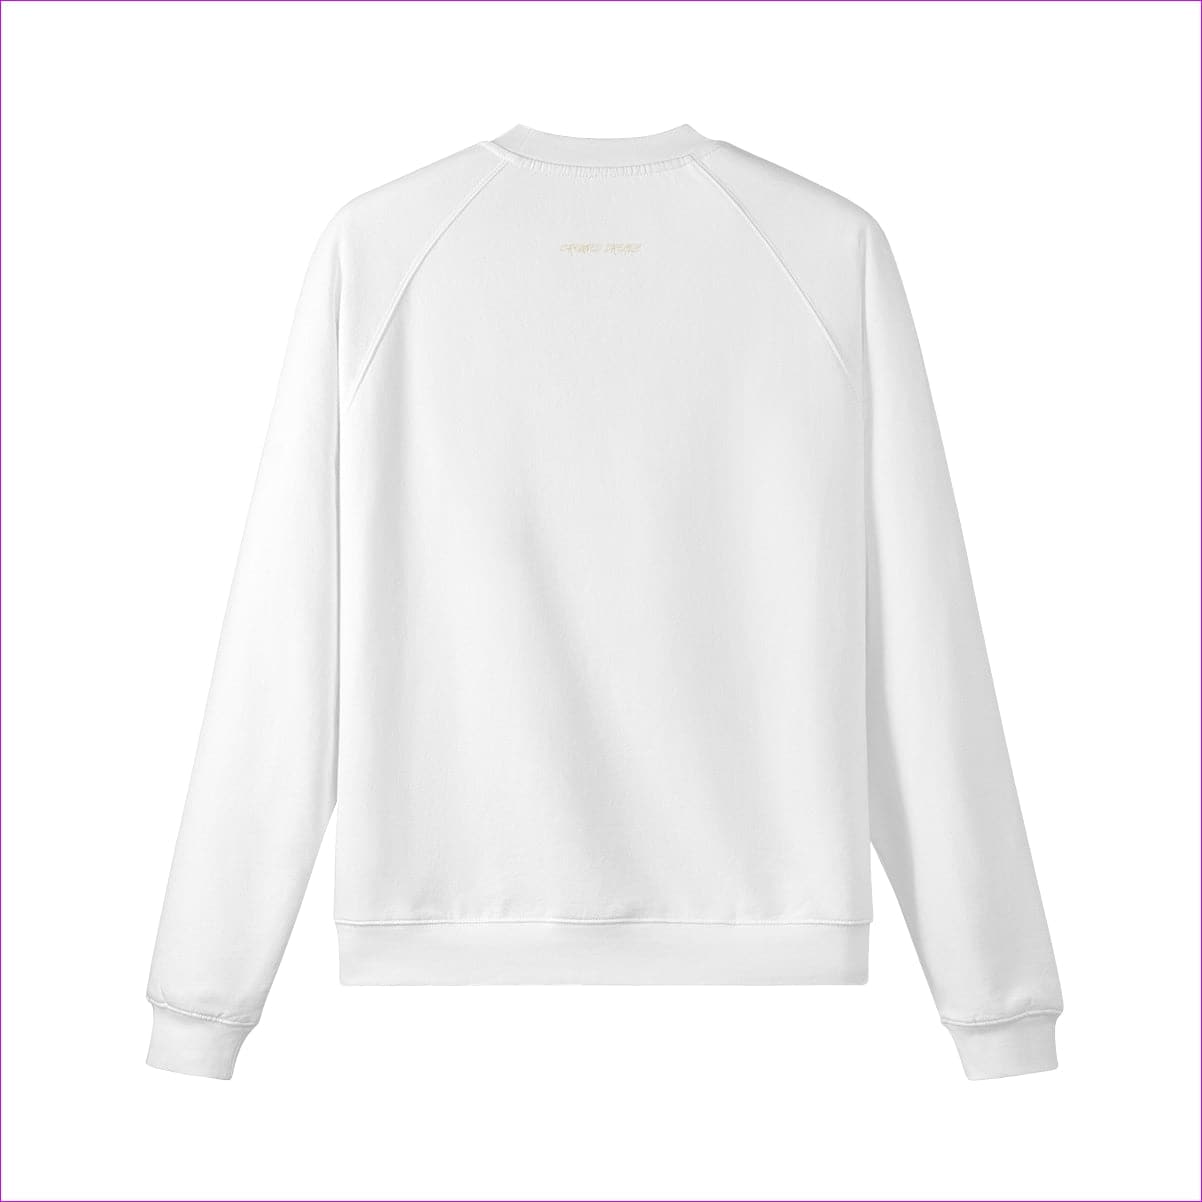 - Crowned Dreadz Heavyweight Fleece-lined Sweatshirt - 6 colors - mens sweatshirt at TFC&H Co.